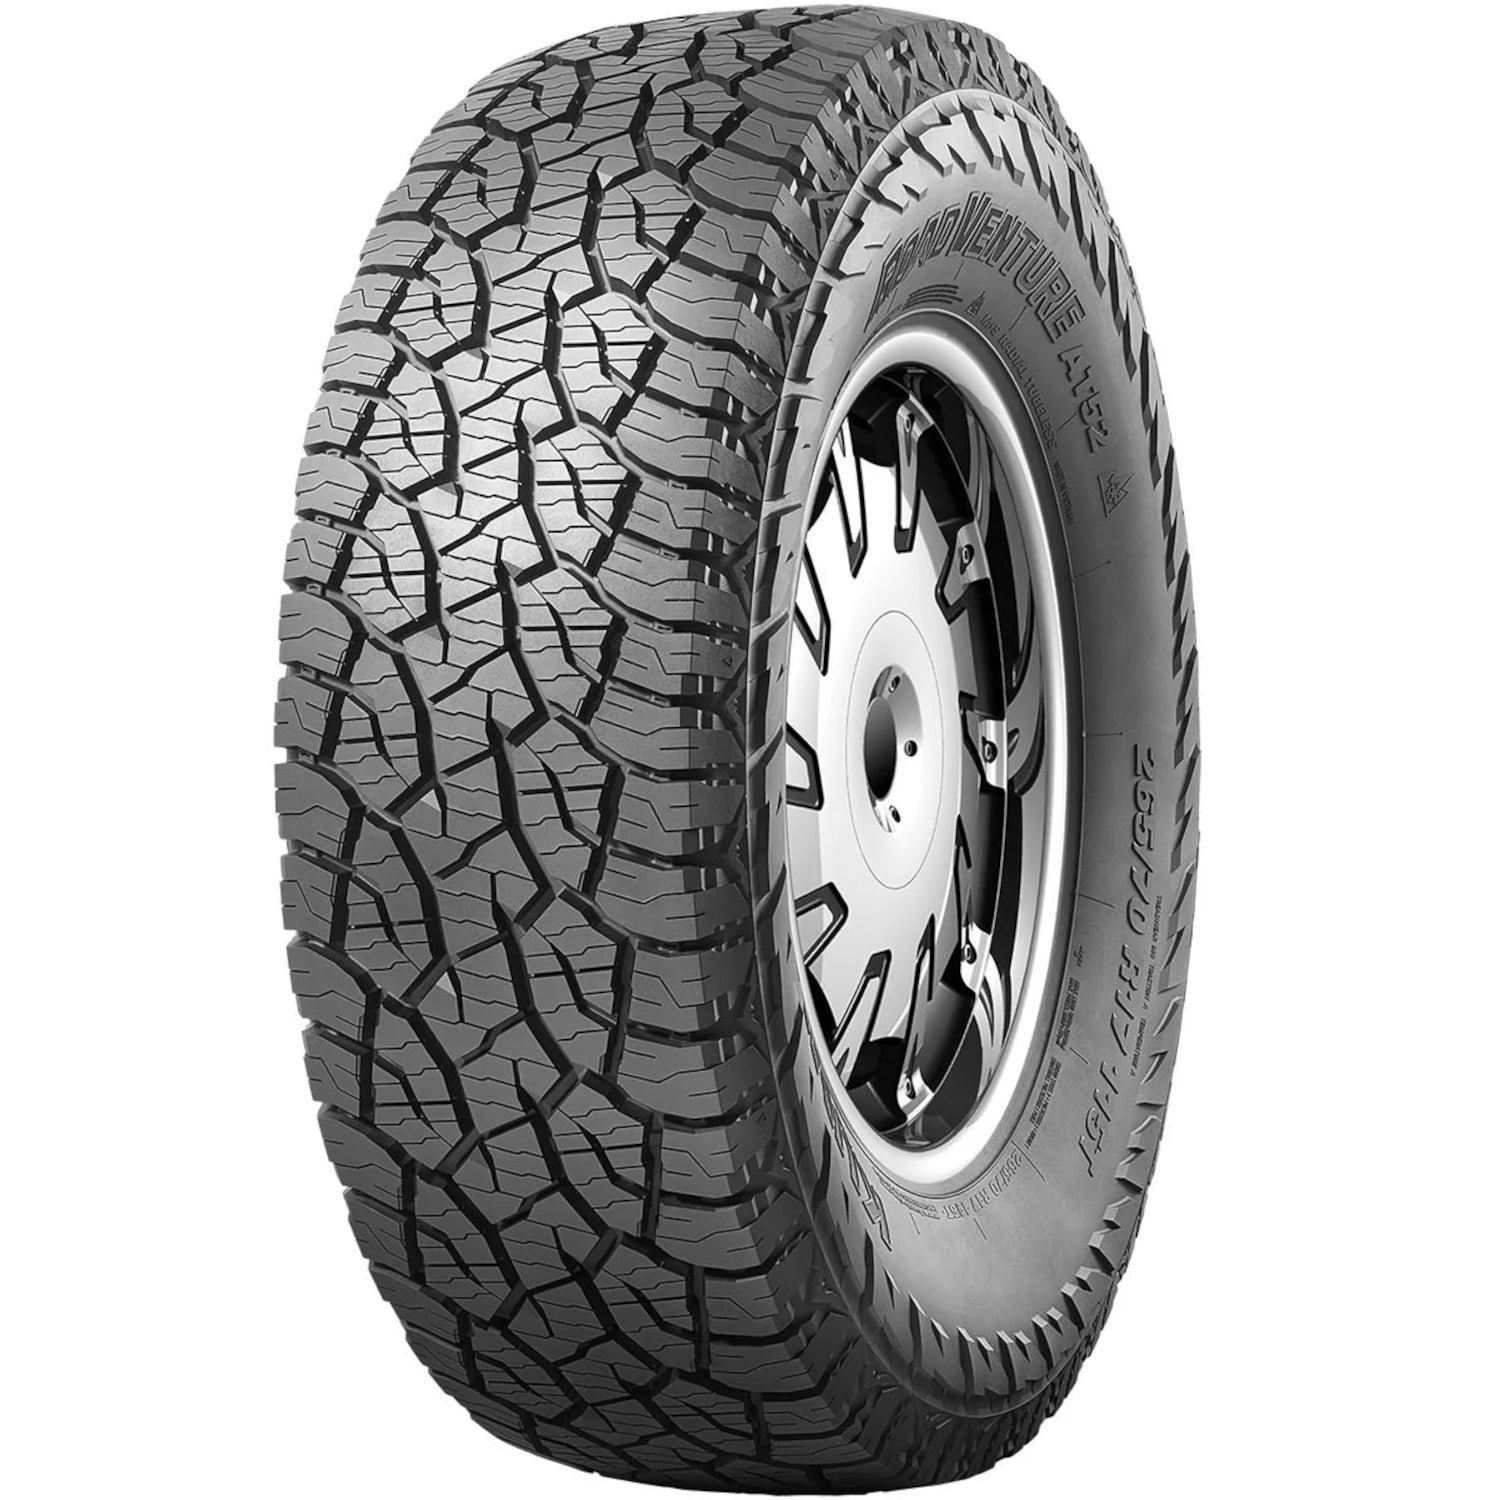 KUMHO ROAD VENTURE AT52 35X12.50R20 Tires